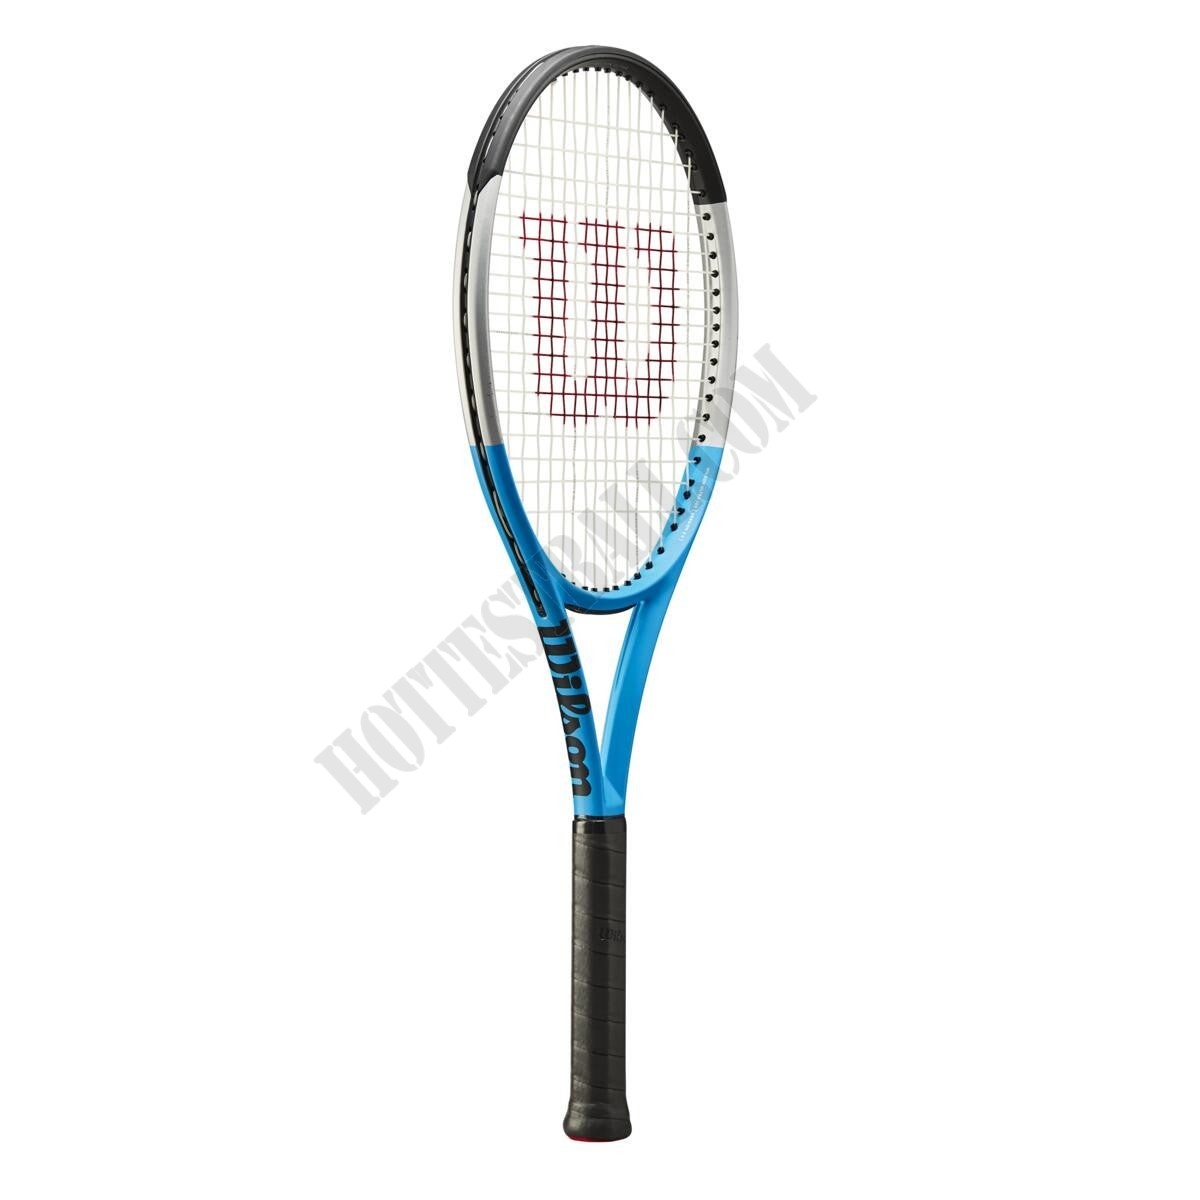 Ultra 100 v3 Reverse Tennis Racket - Wilson Discount Store - Ultra 100 v3 Reverse Tennis Racket - Wilson Discount Store